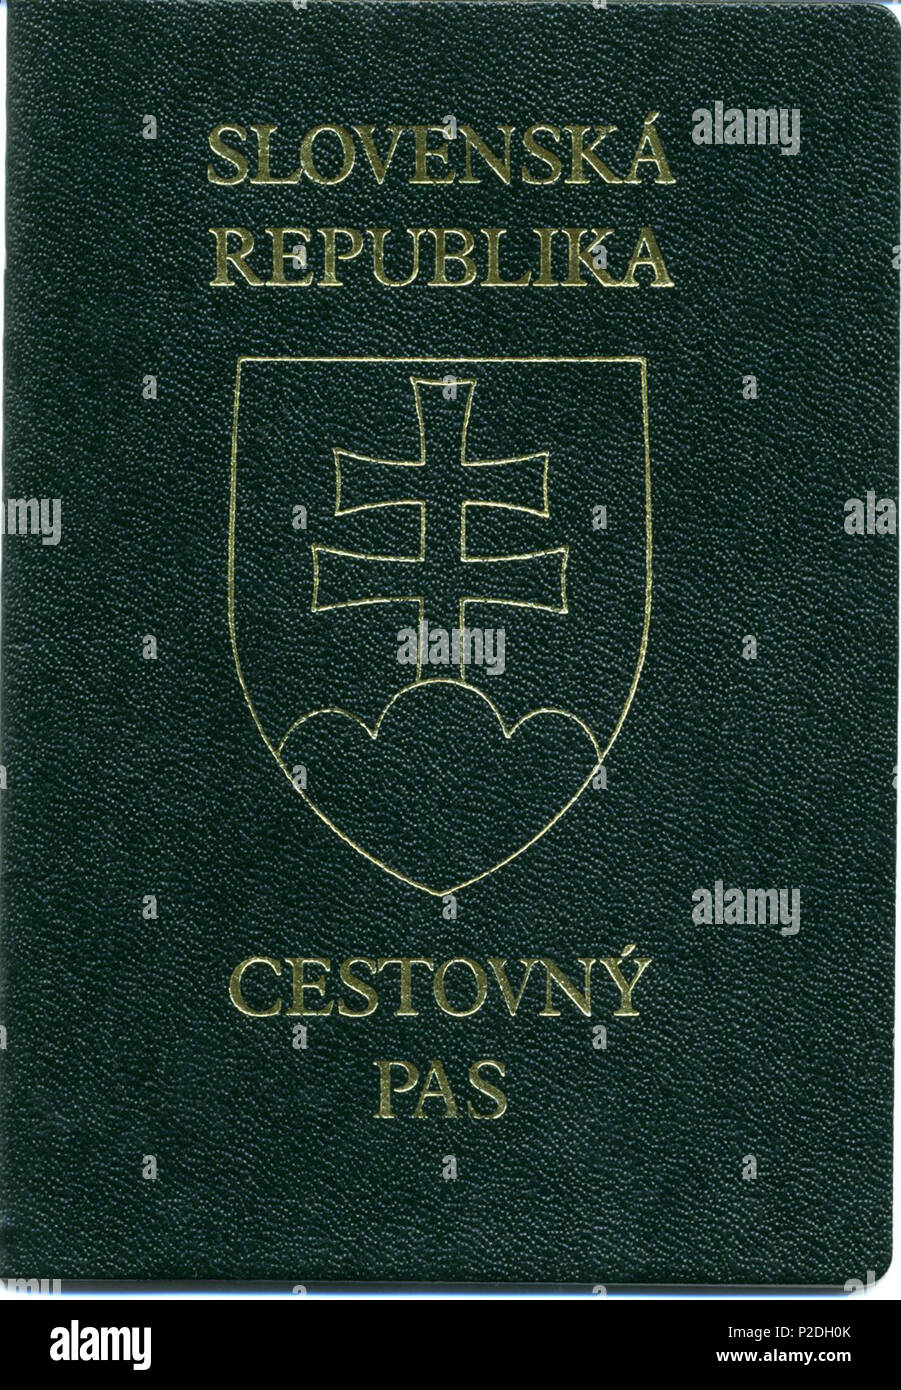 English Slovak Passport First Issue April 1 1994 1